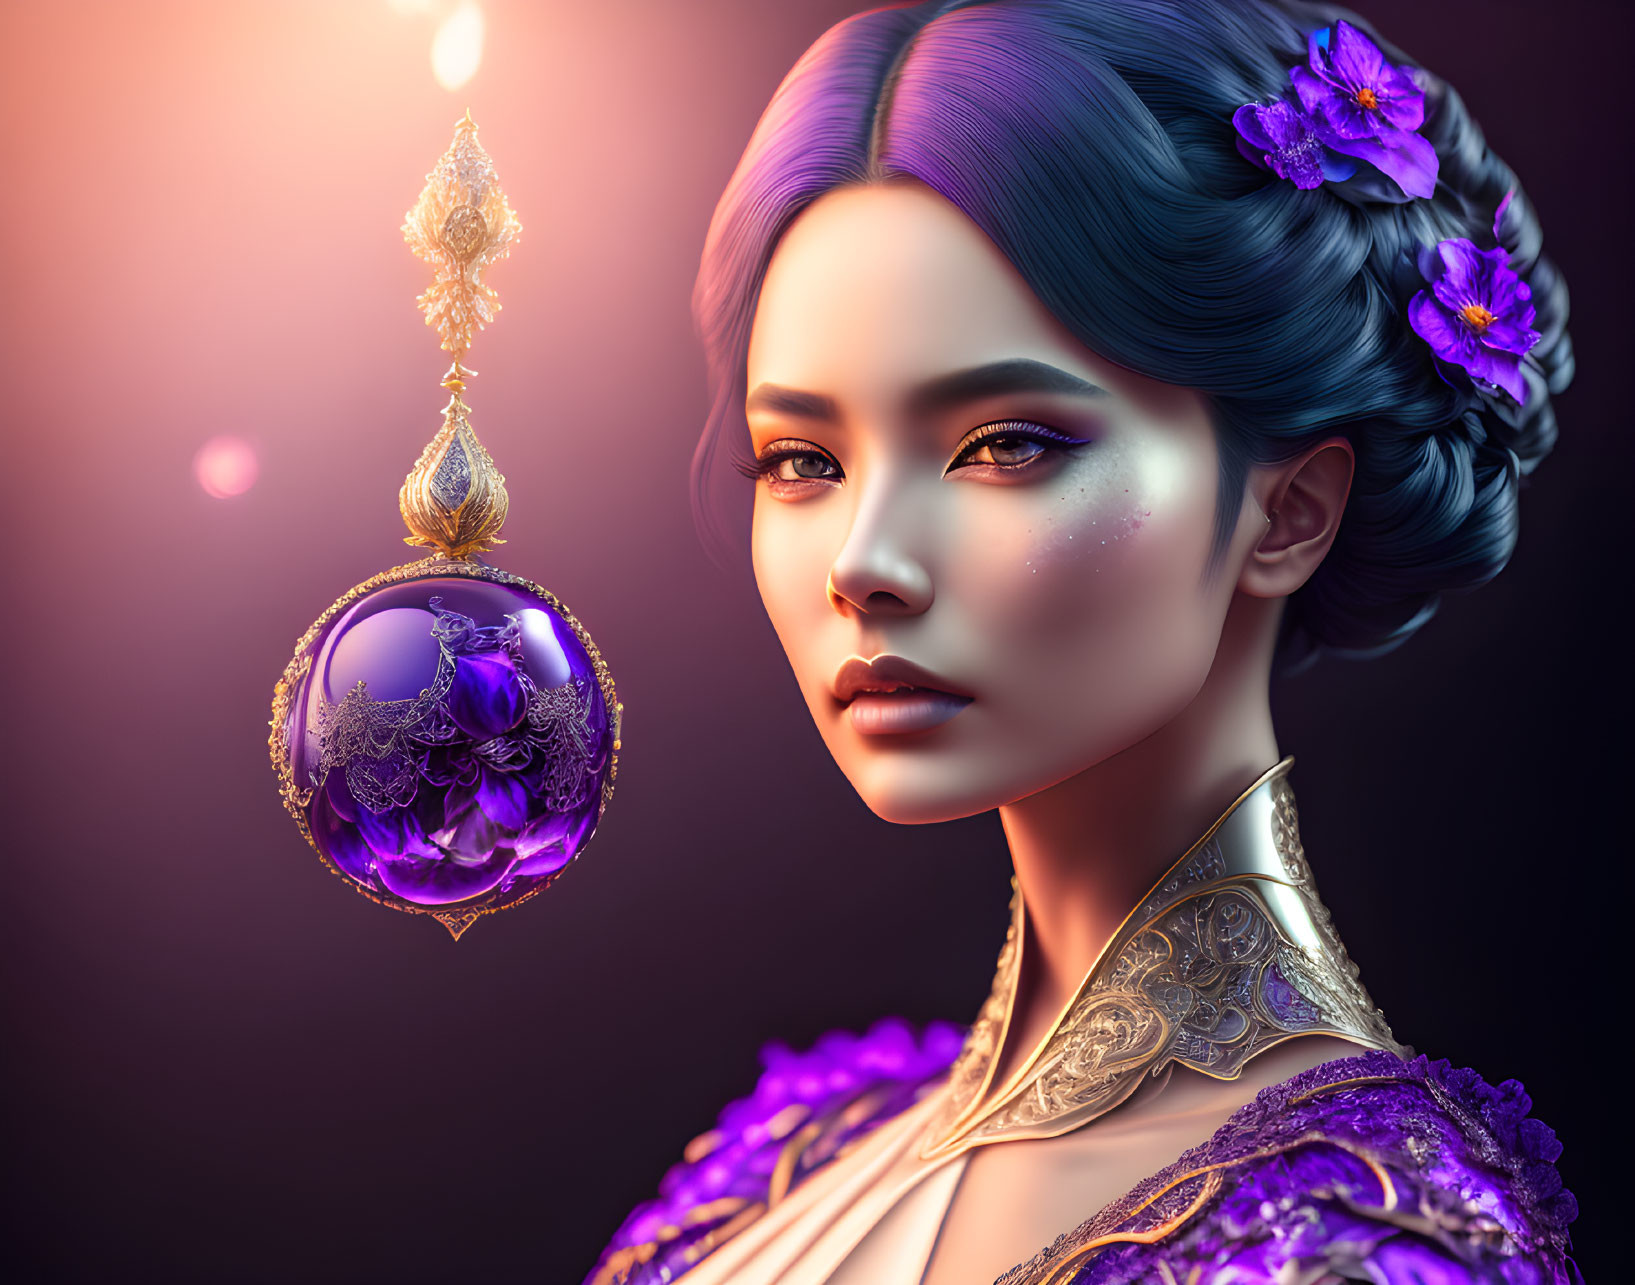 Digital Artwork: Woman with Purple Hair, Flowers, and Glowing Orb